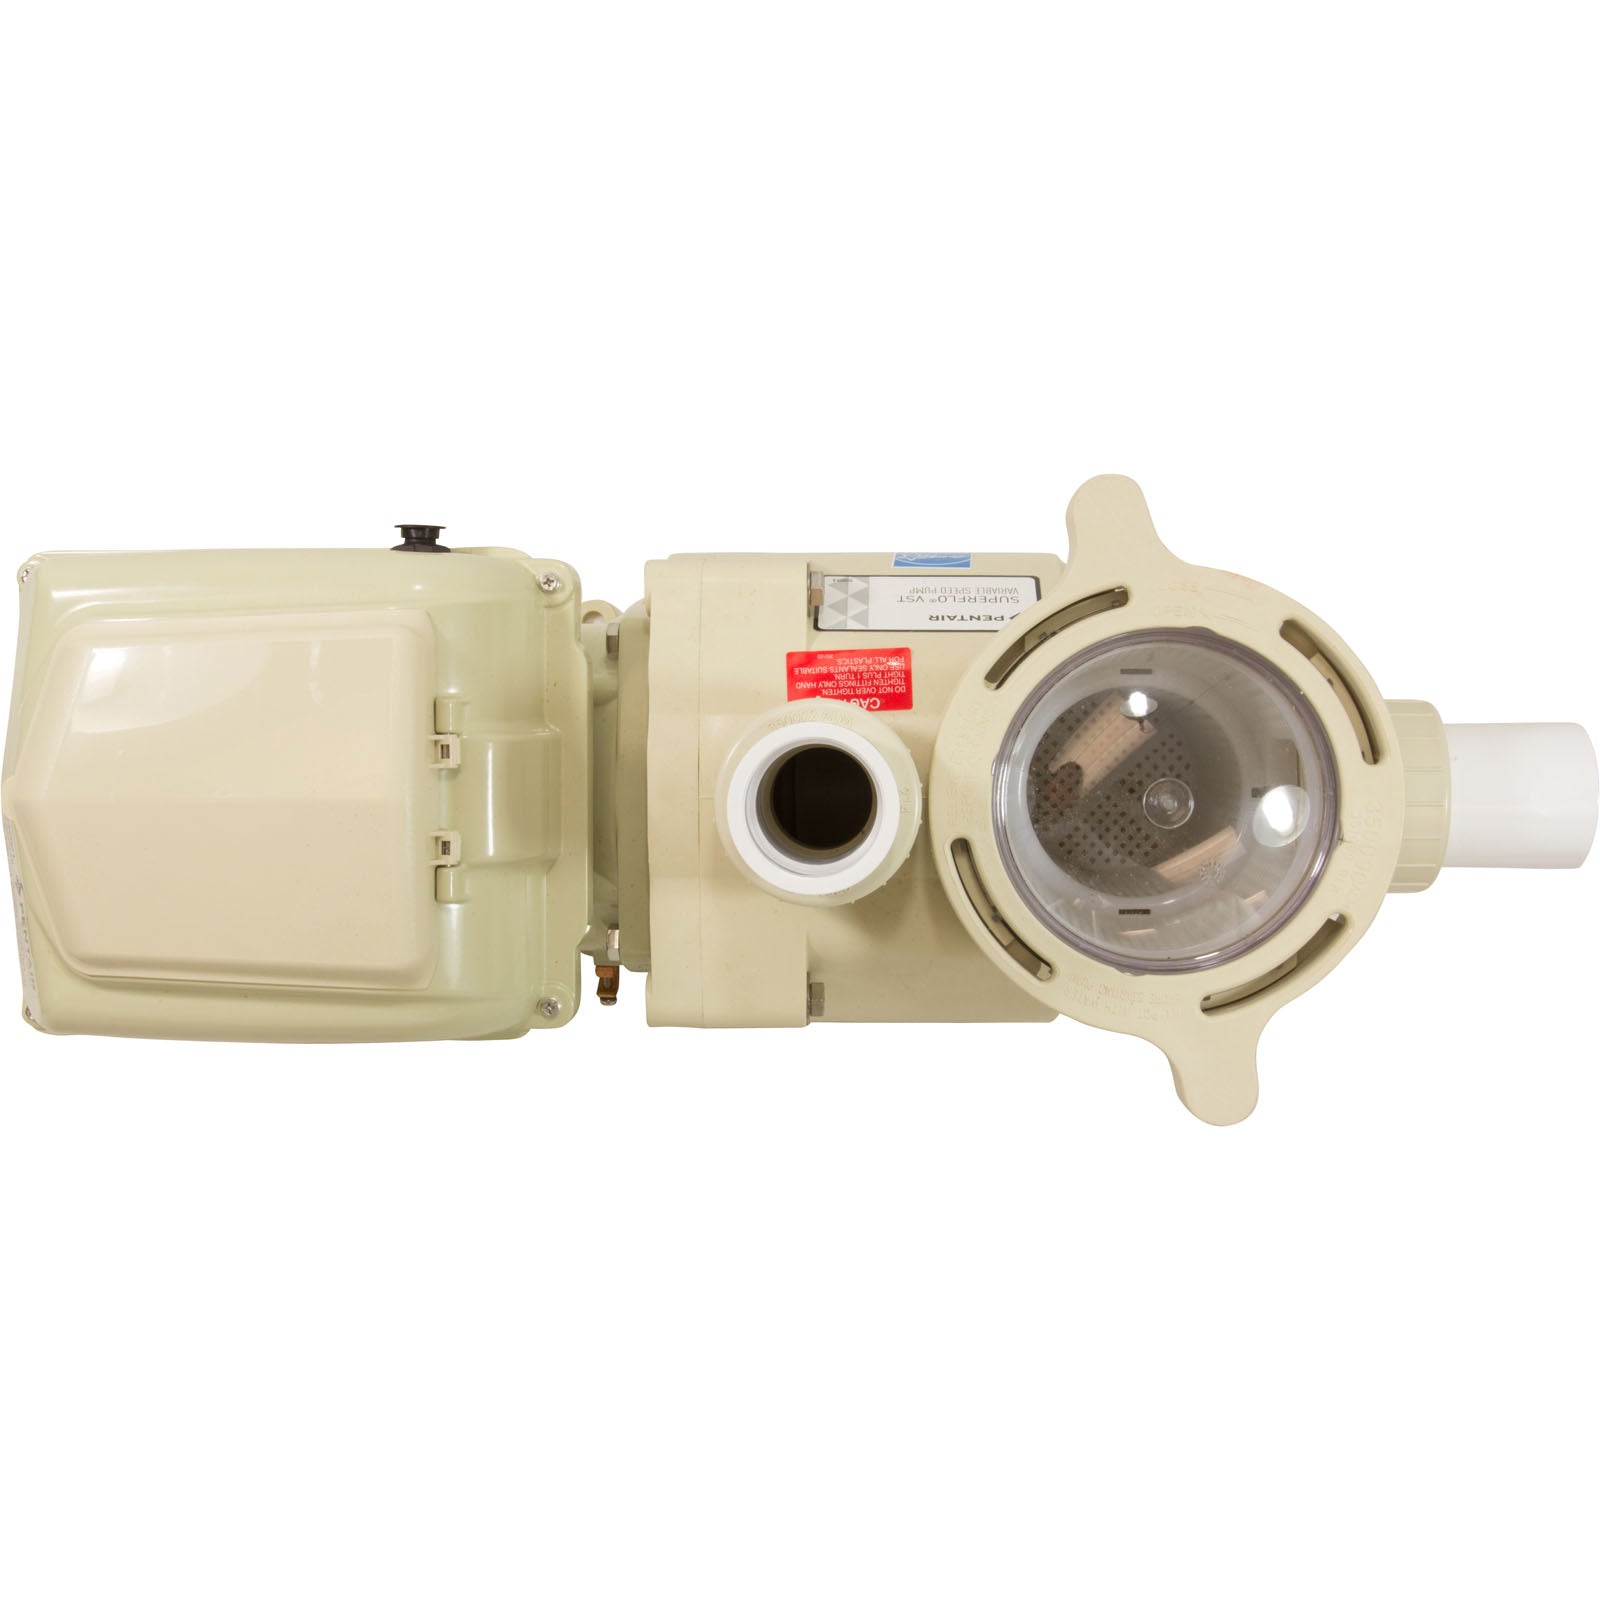 Pentair Superflo Variable Speed Pump EC-342001 115/230V